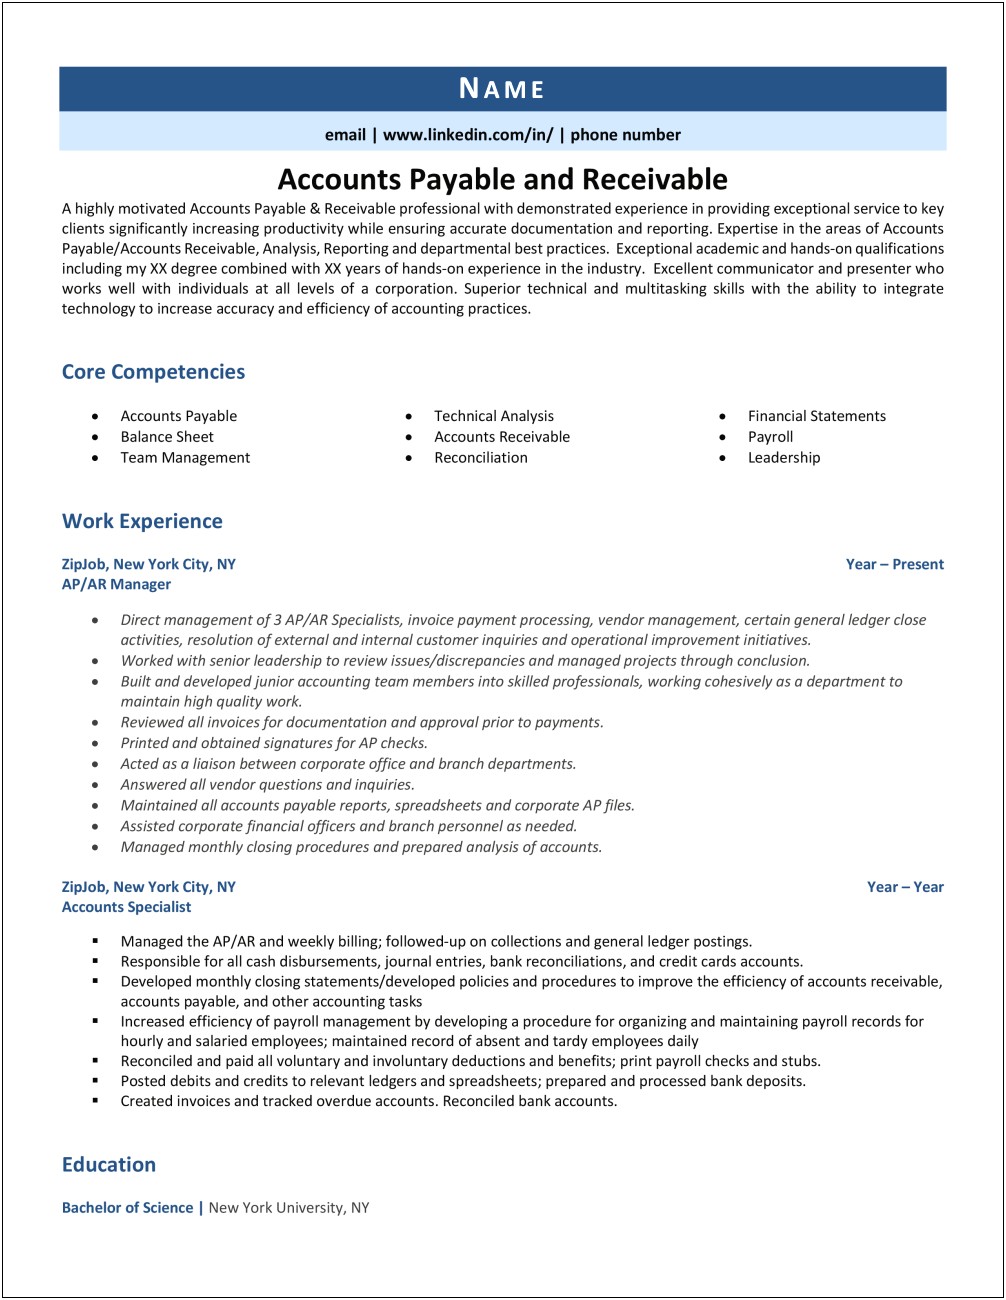 Accounts Payable And Receivable Resume Summary